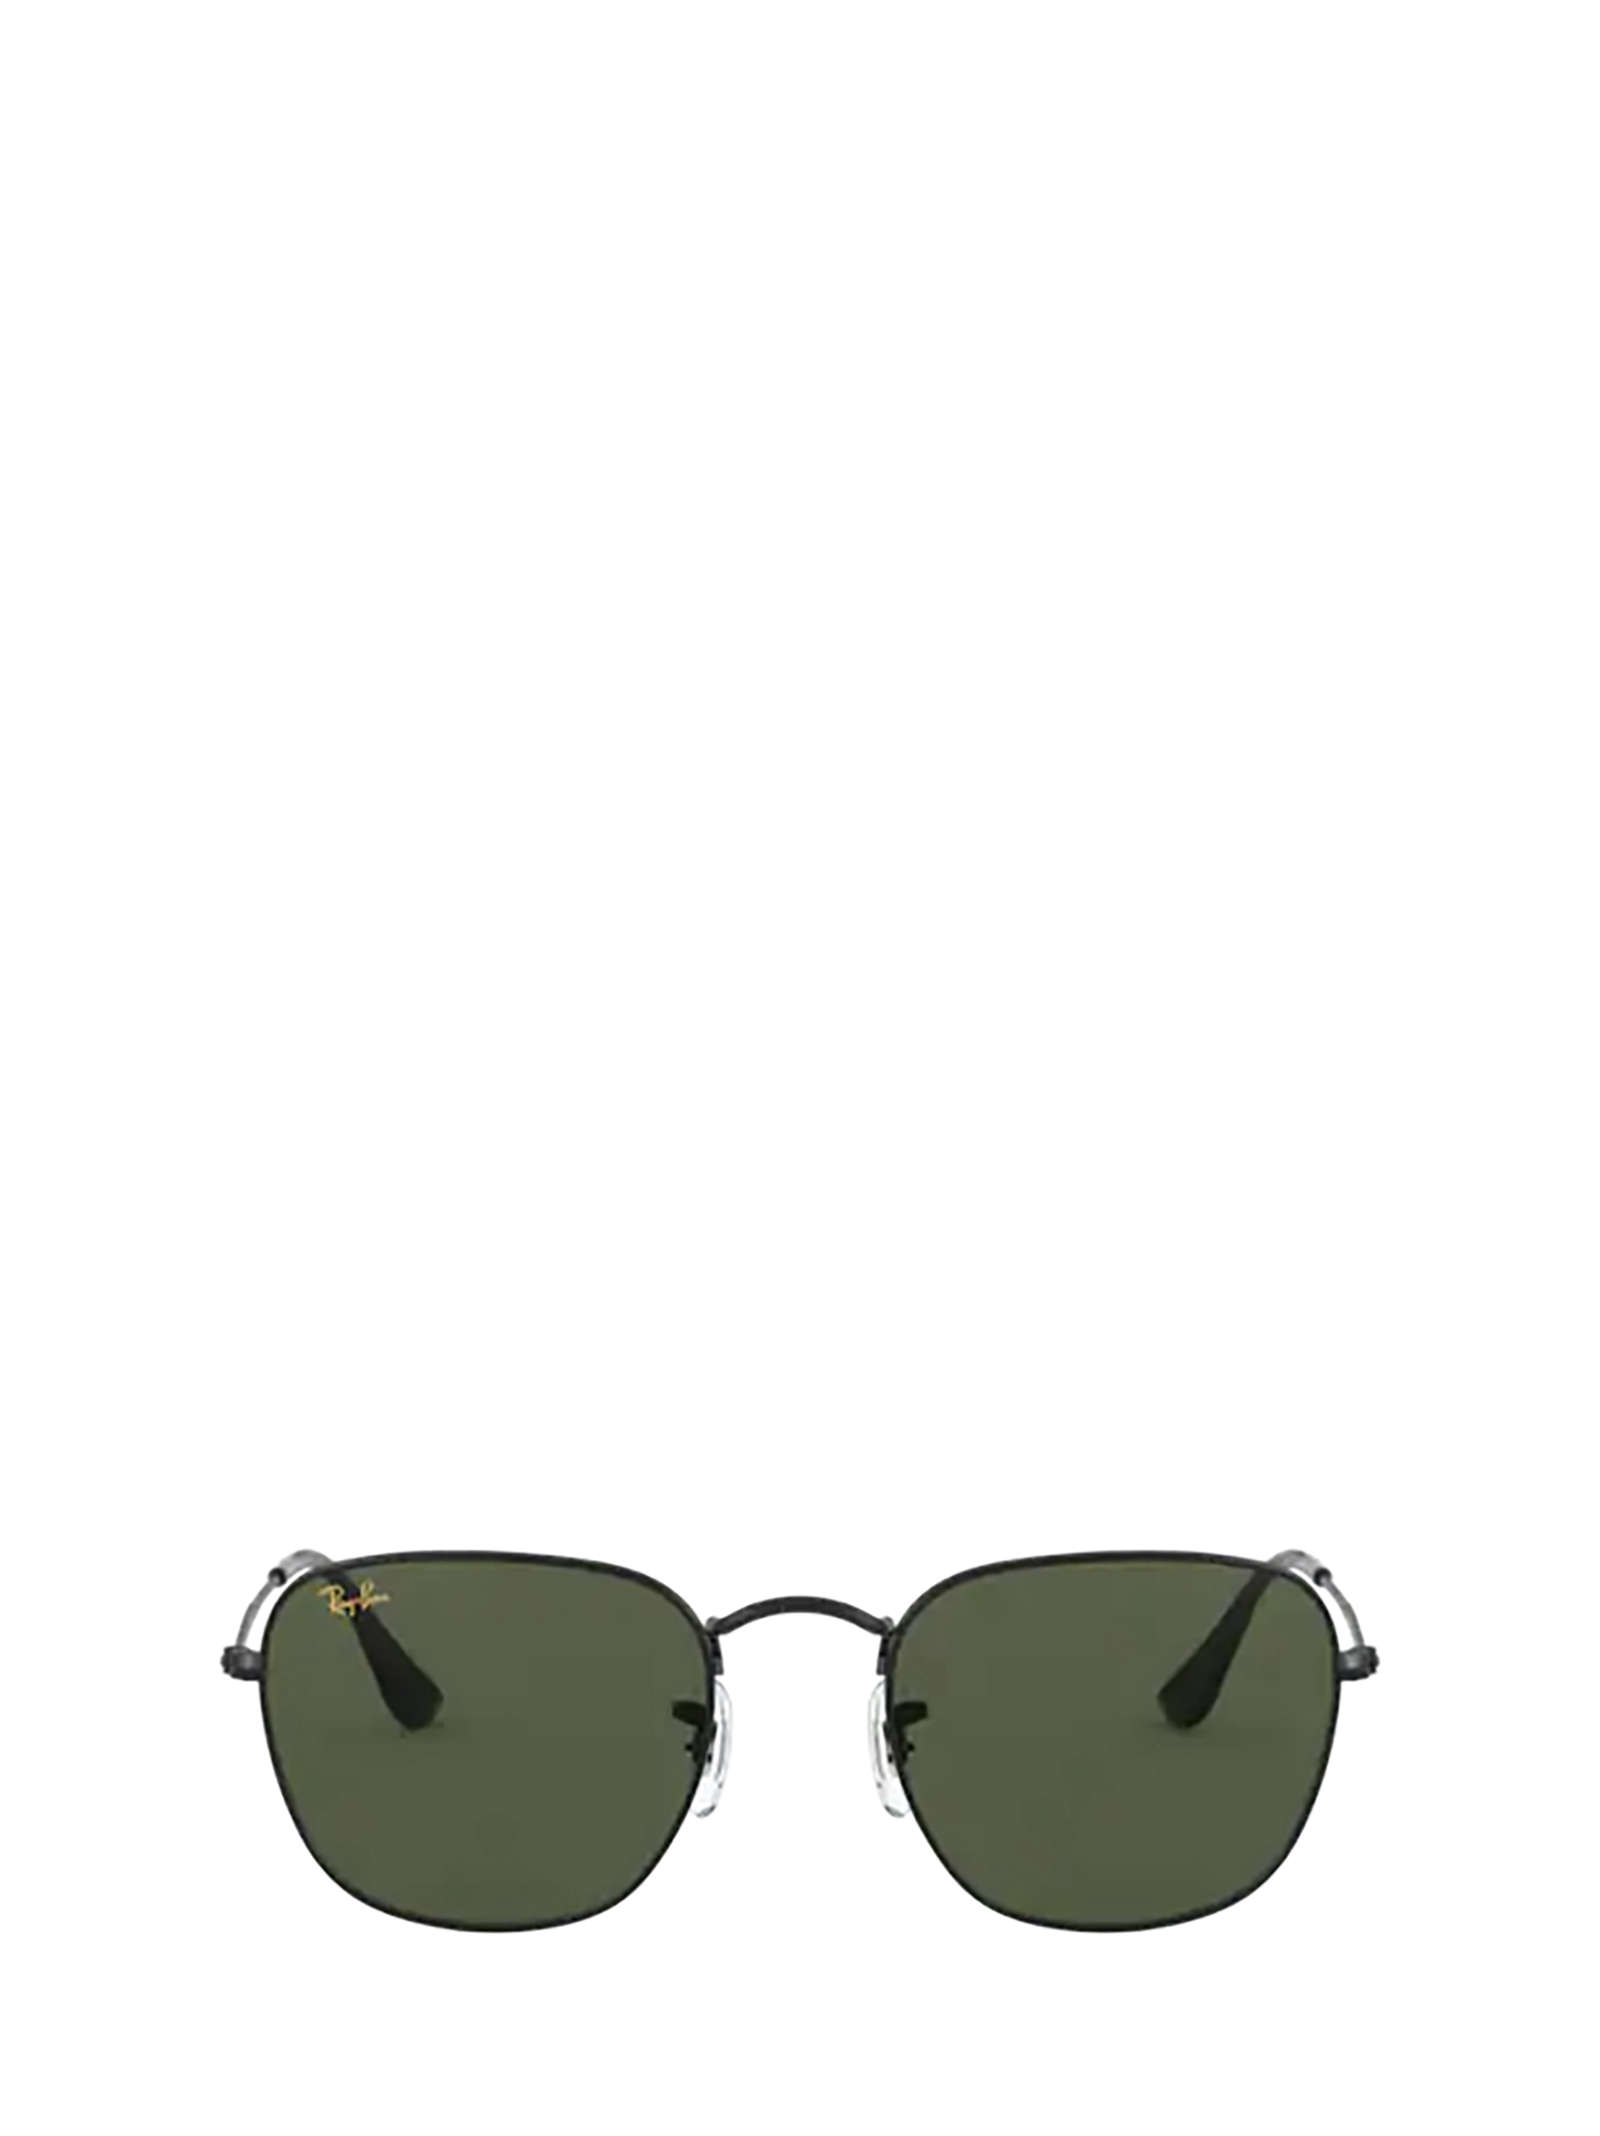 Ray Ban Ray-ban Rb3857 Black Sunglasses